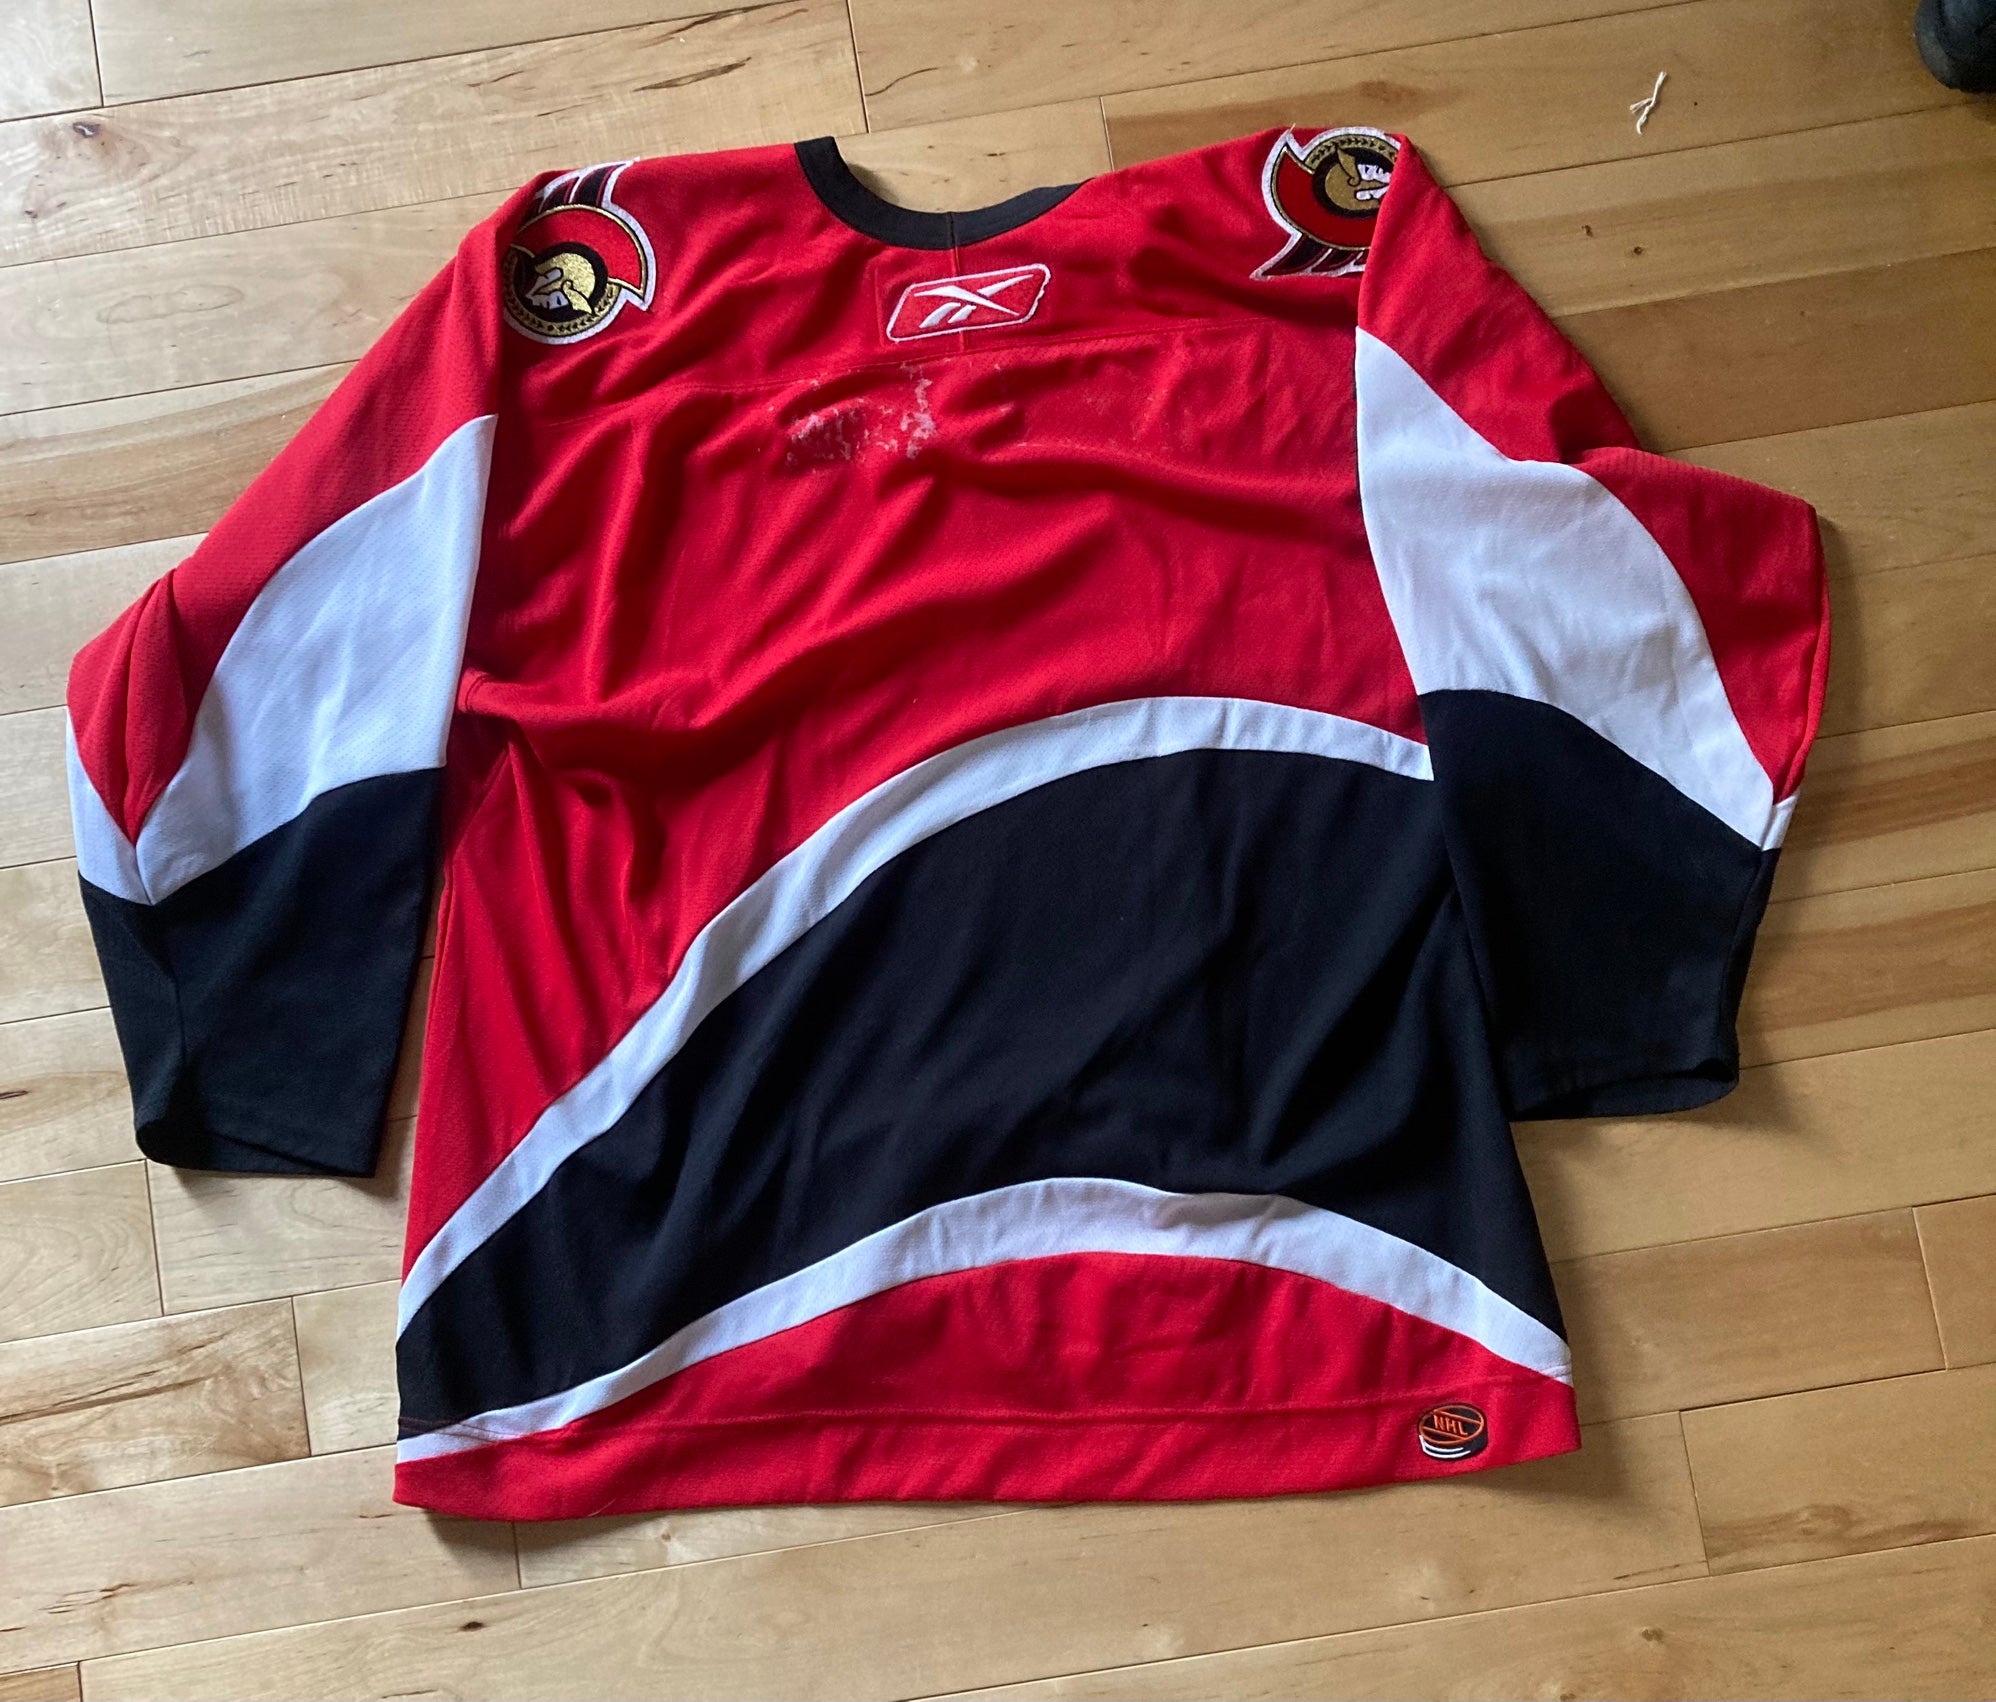 Ottawa Senators: 2006/07 Koho Jersey (XL) – National Vintage League Ltd.